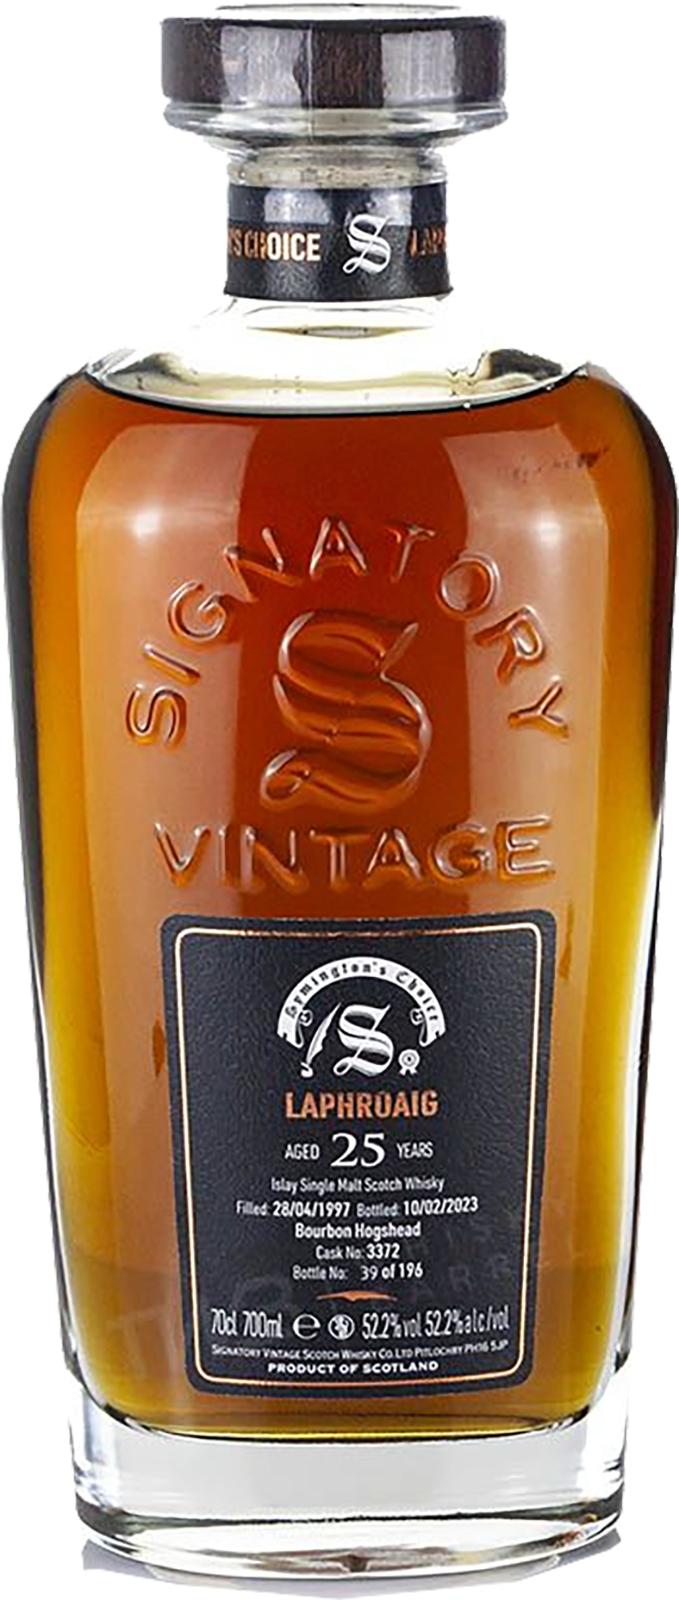 Laphroaig 1997 (Signatory Vintage) Cask Strength Collection - Symington’s Choice 25 Year Old Scotch Whisky | 700ML